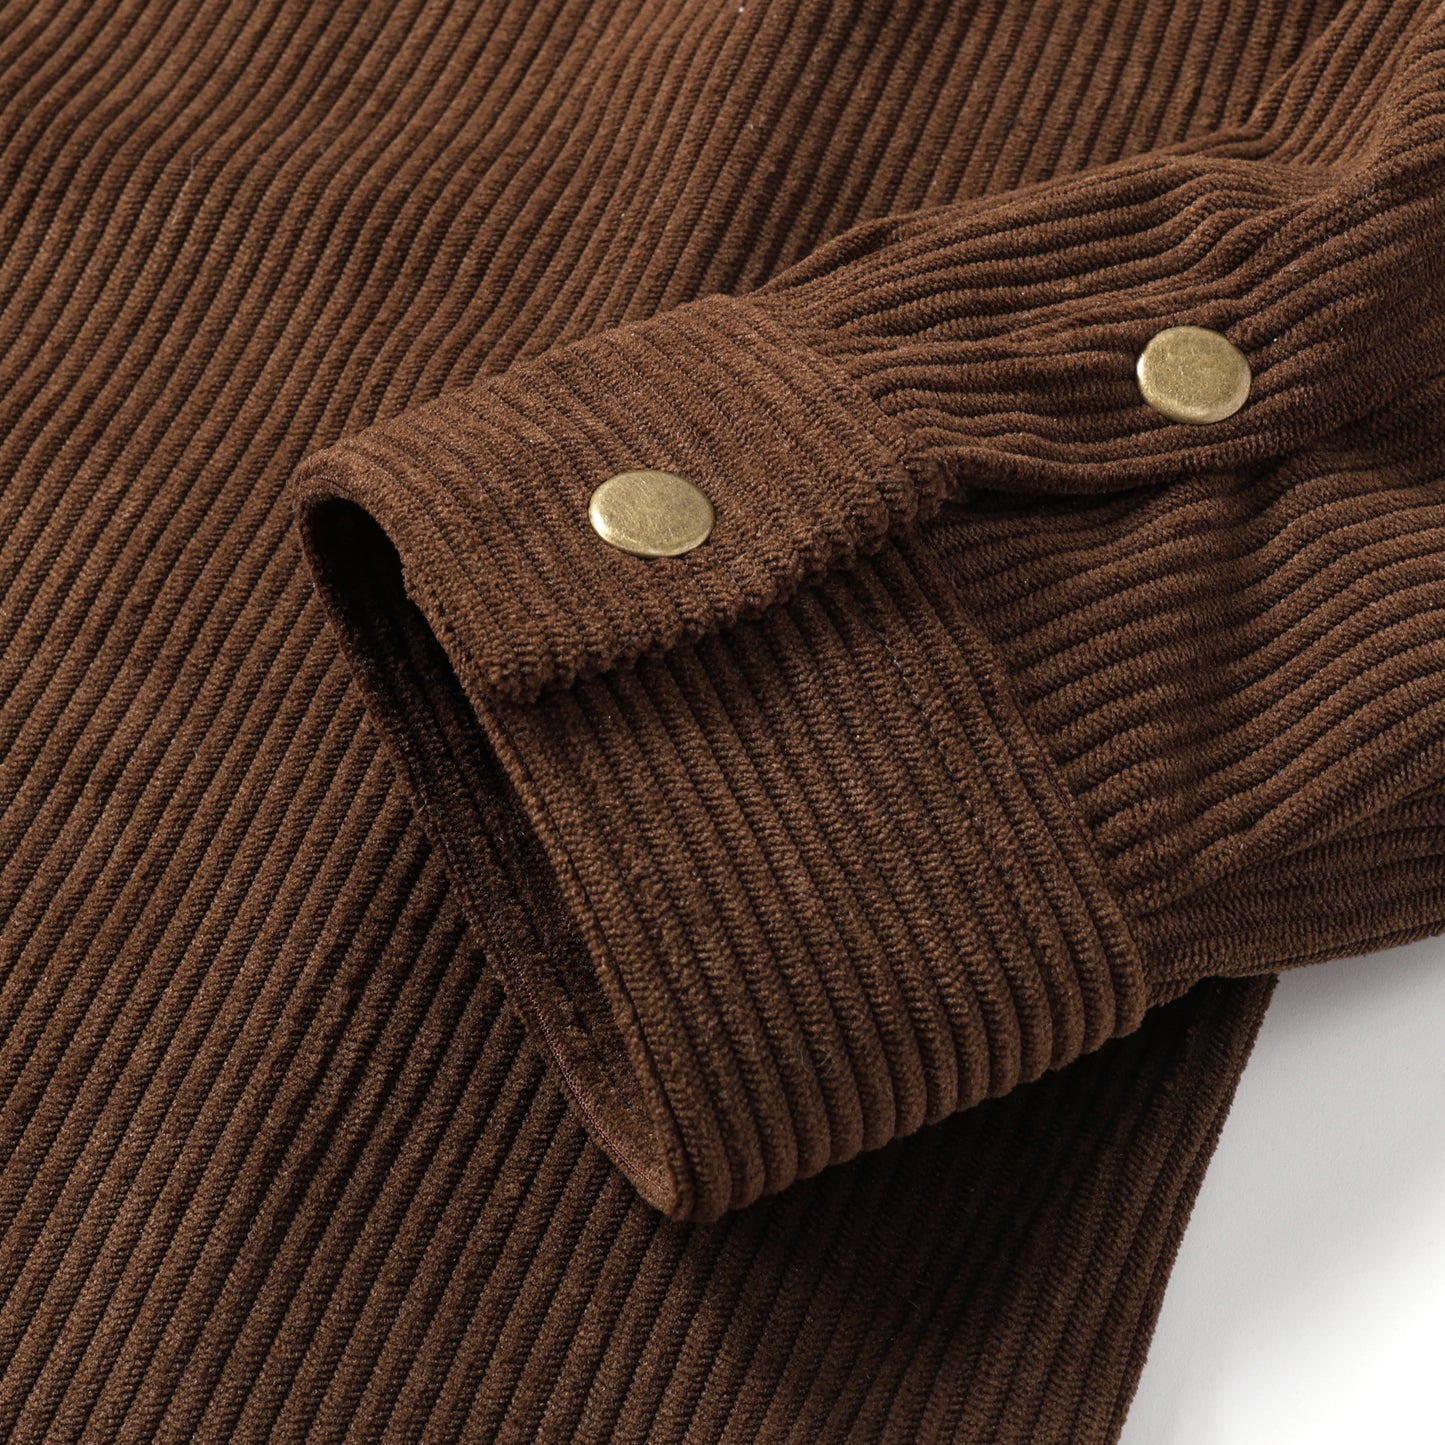 Corduroy Plain Color Snap Closure Long Sleeve Shirt-Brown